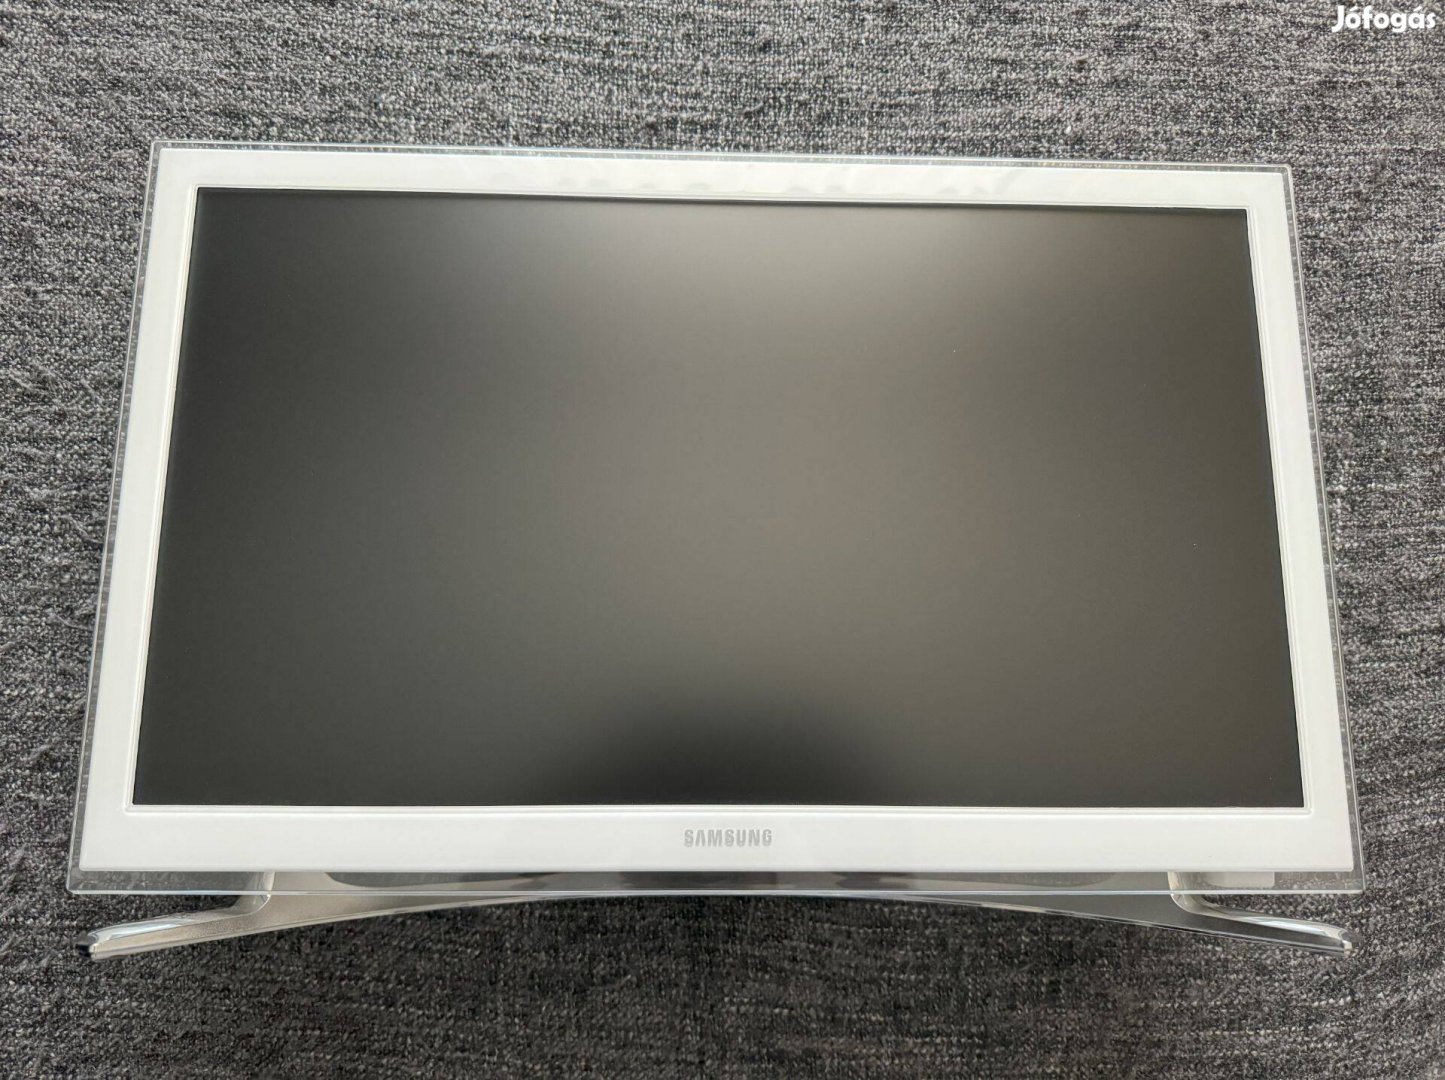 Samsung 22"-os Fullhd LED Smart TV (UE22H5680SS)